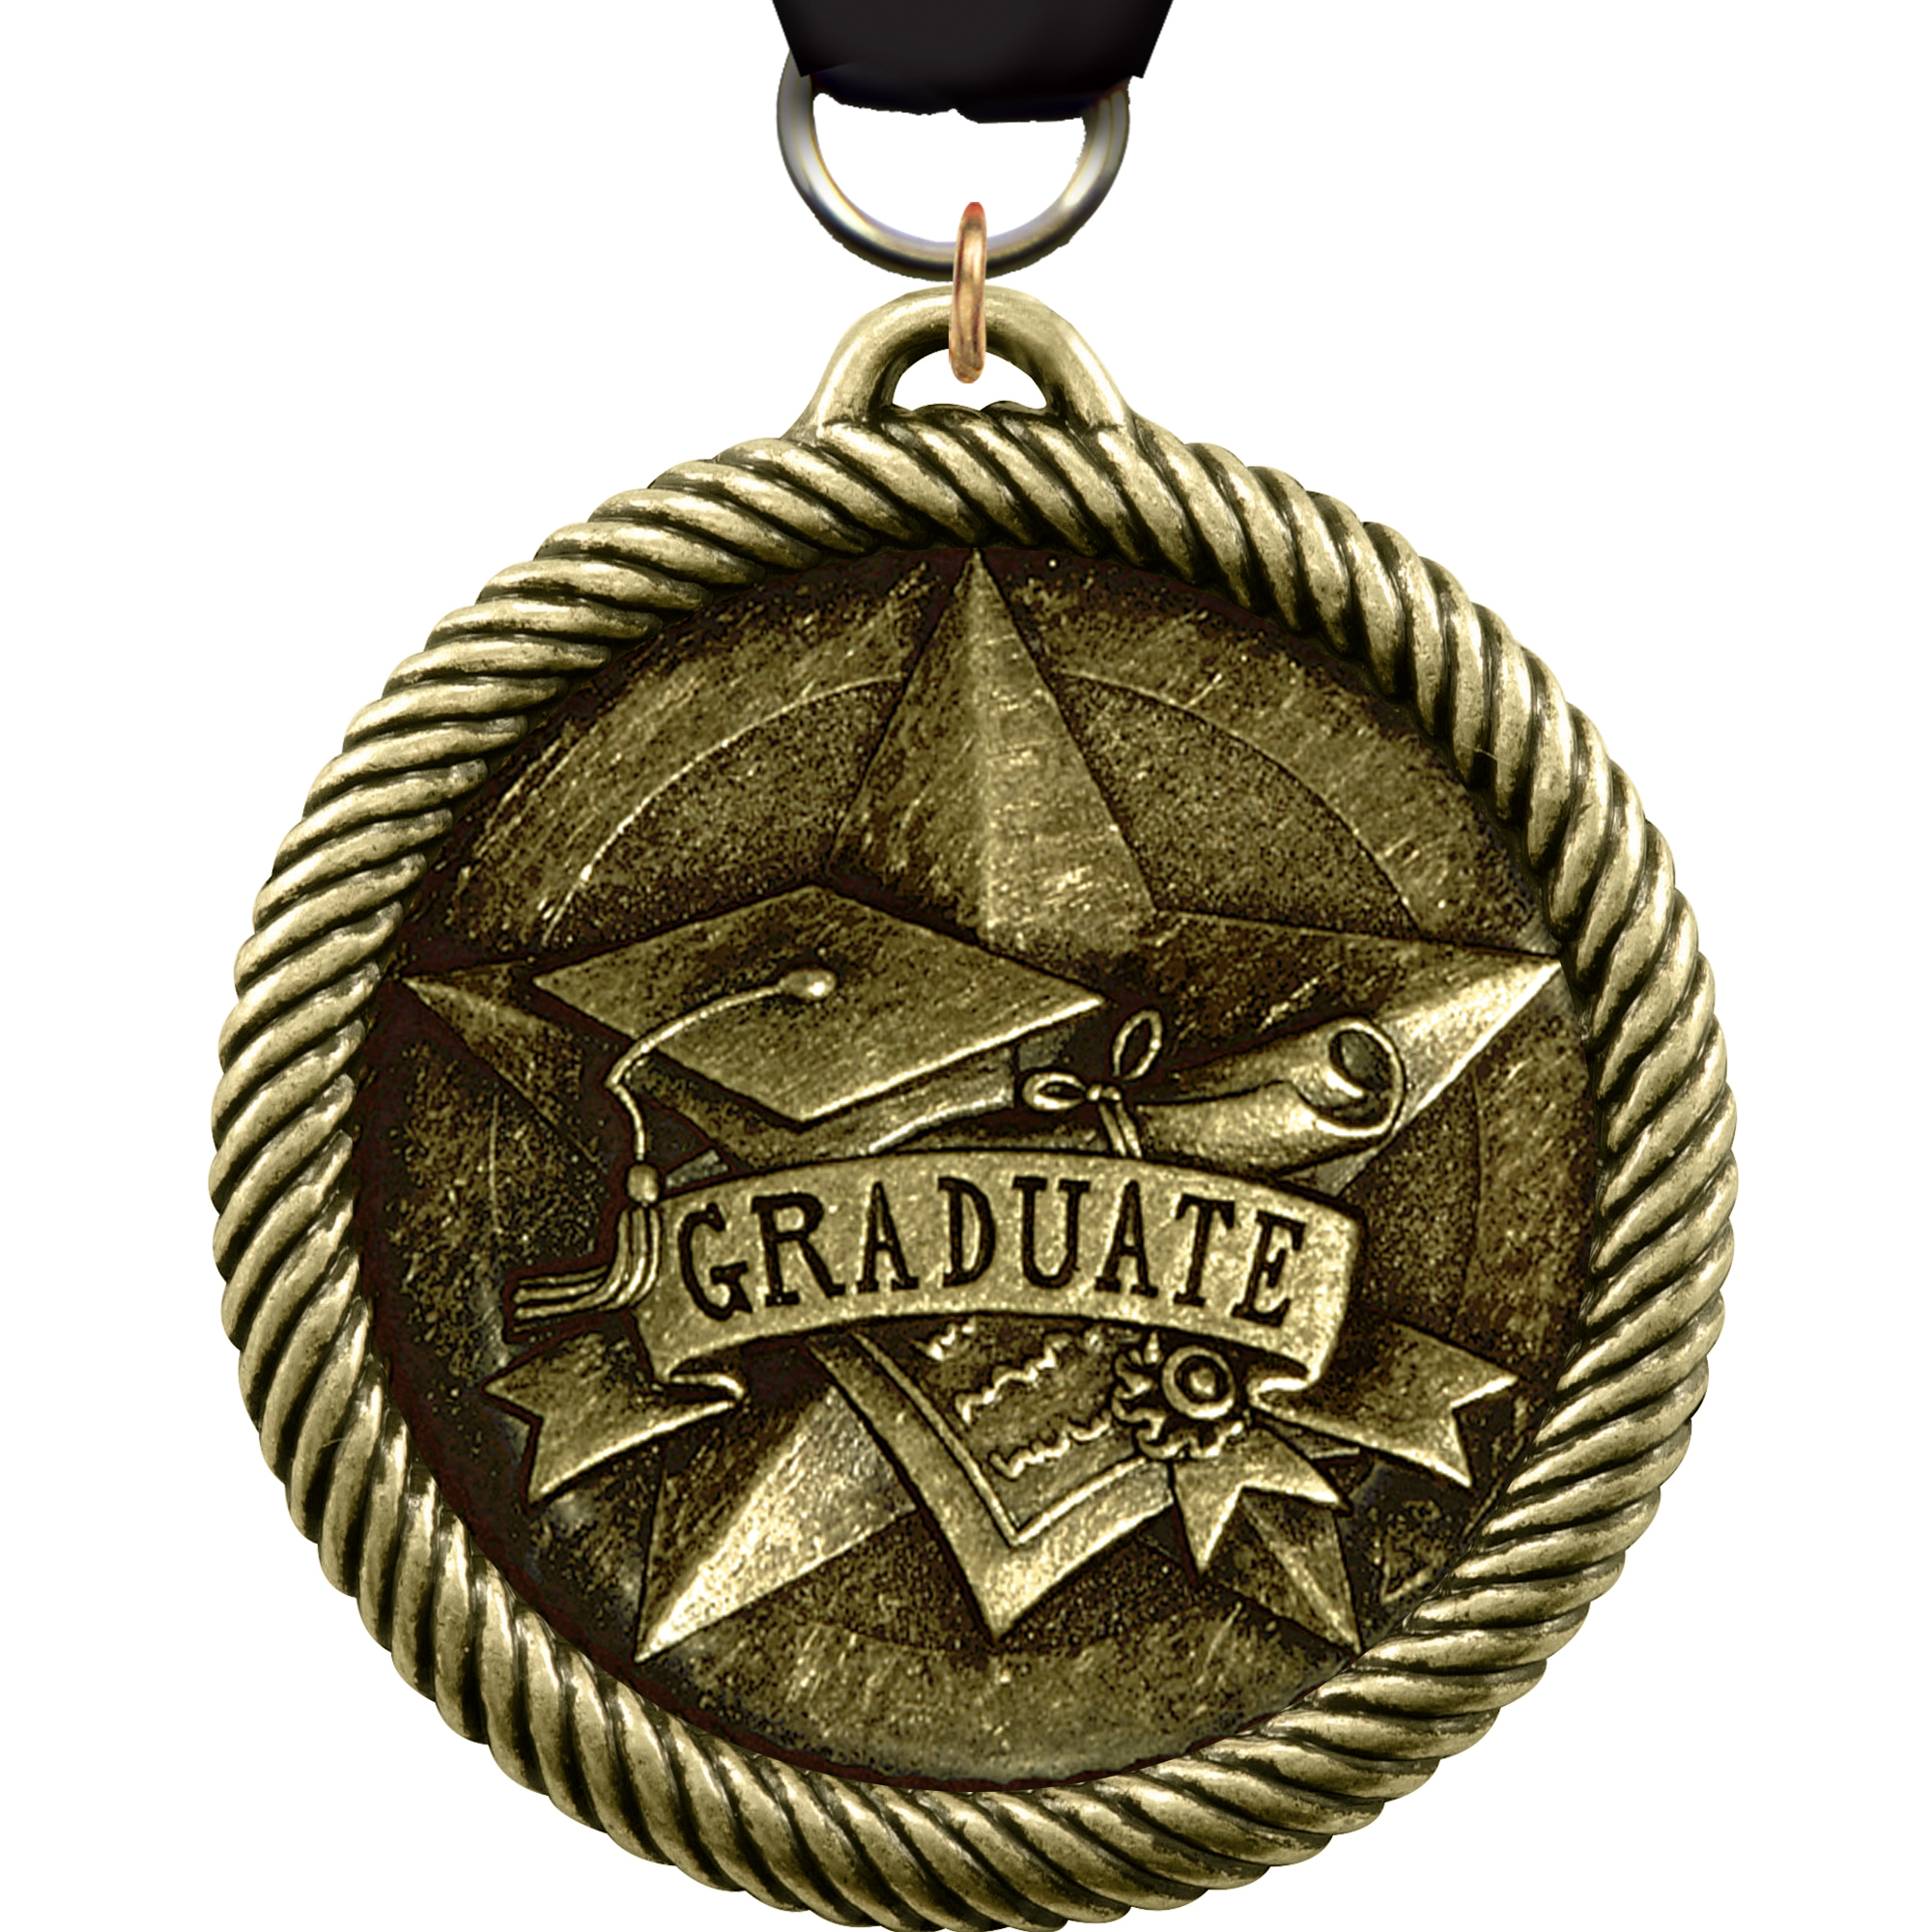 Graduate Scholastic Medal